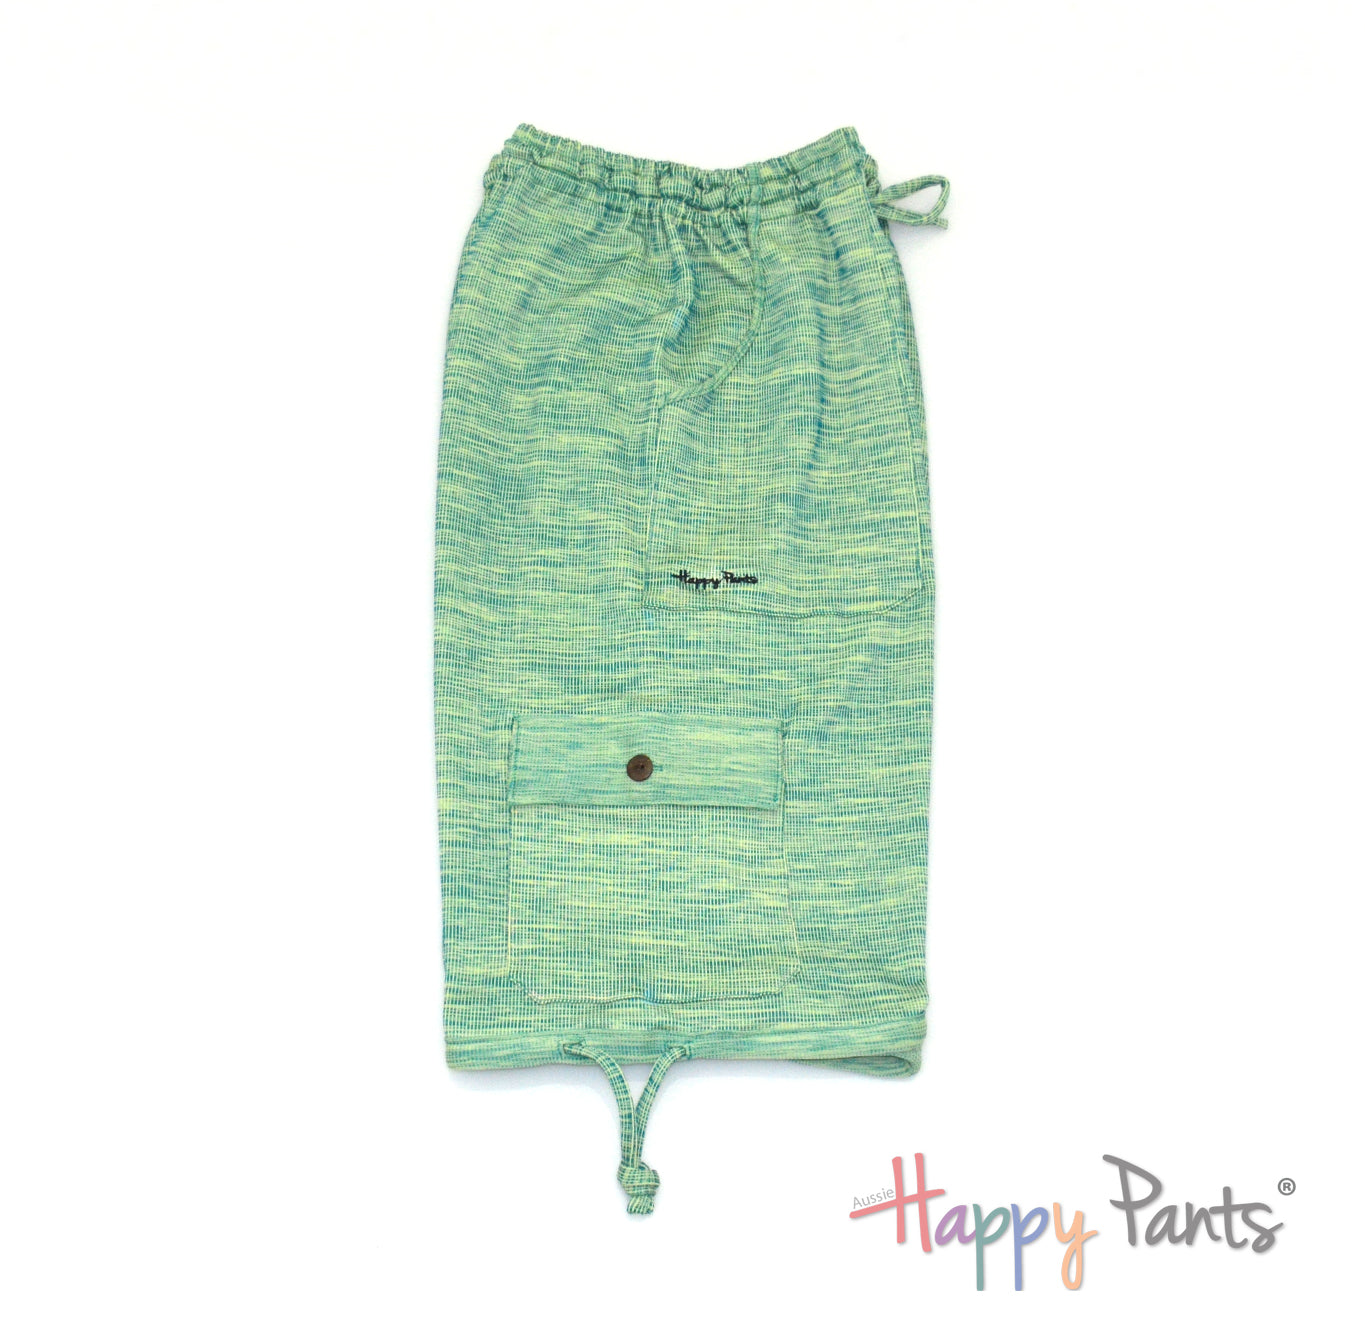 green Men’s shorts with elastic waist holiday pants resort wear Australia comfy cotton bordies